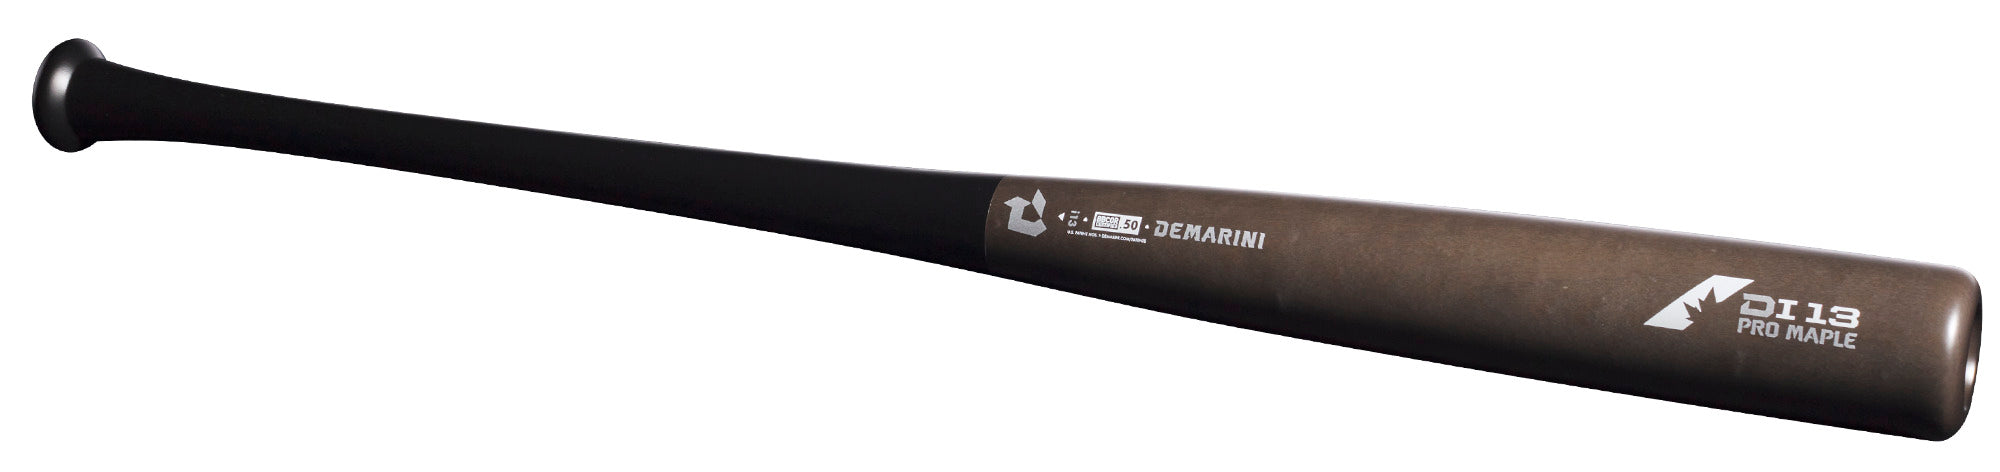 Demarini DI13 Pro Maple Wood Composite Baseball Bat